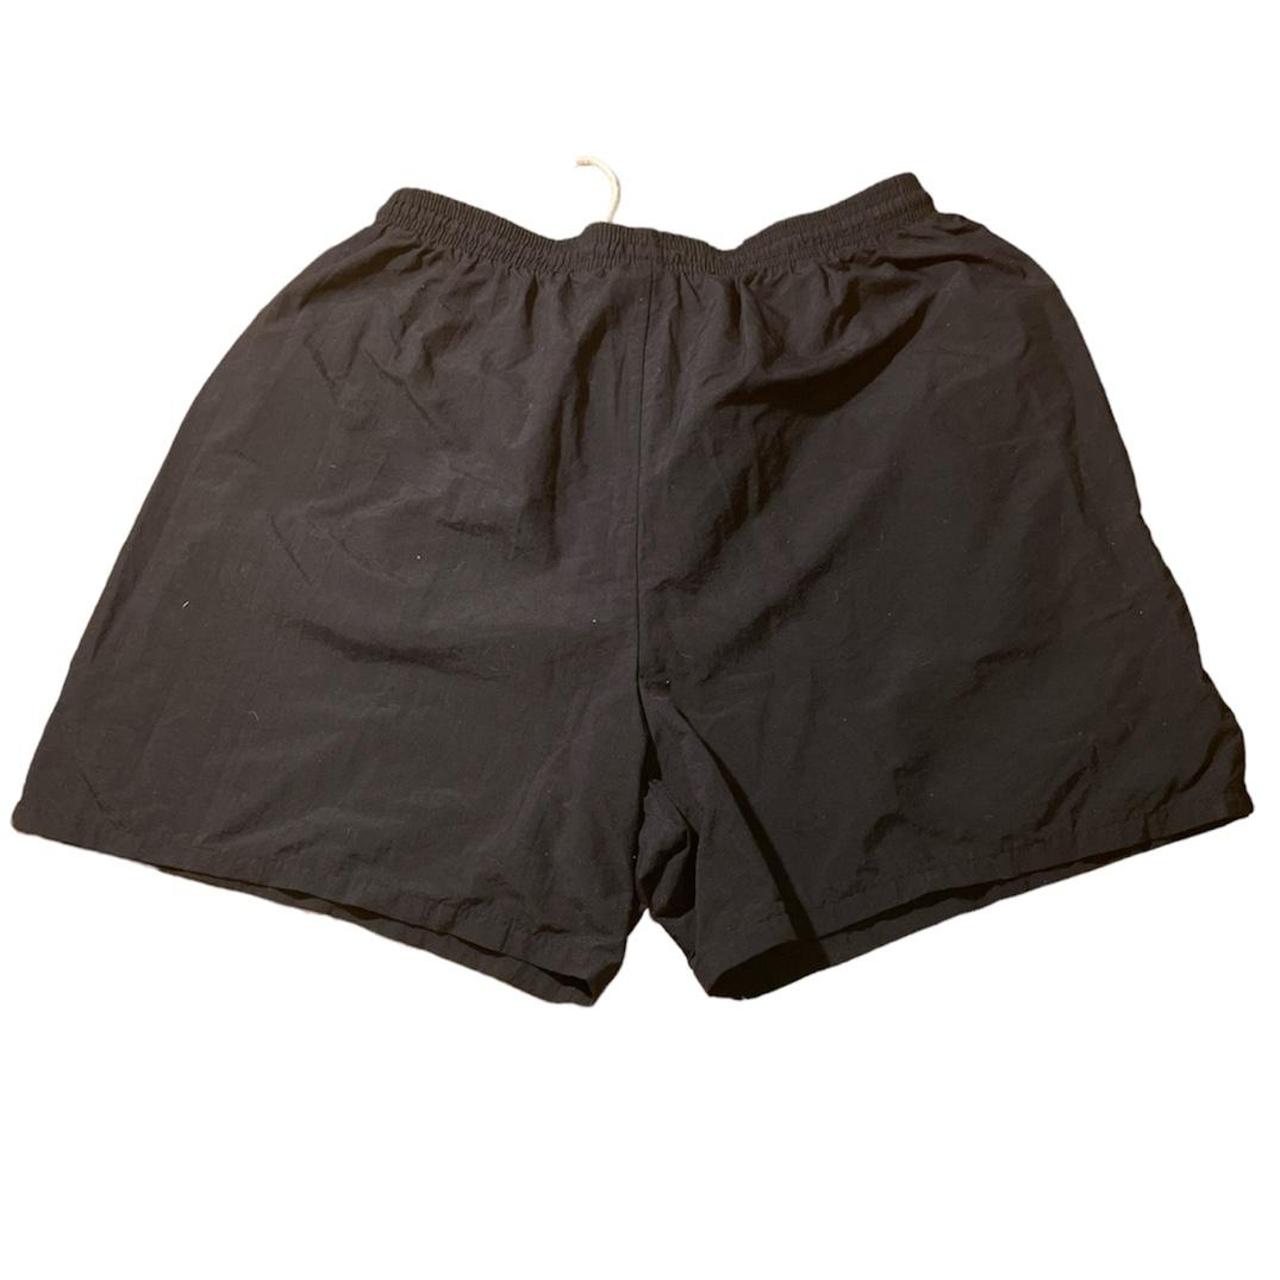 Converse Men's Black Shorts (4)